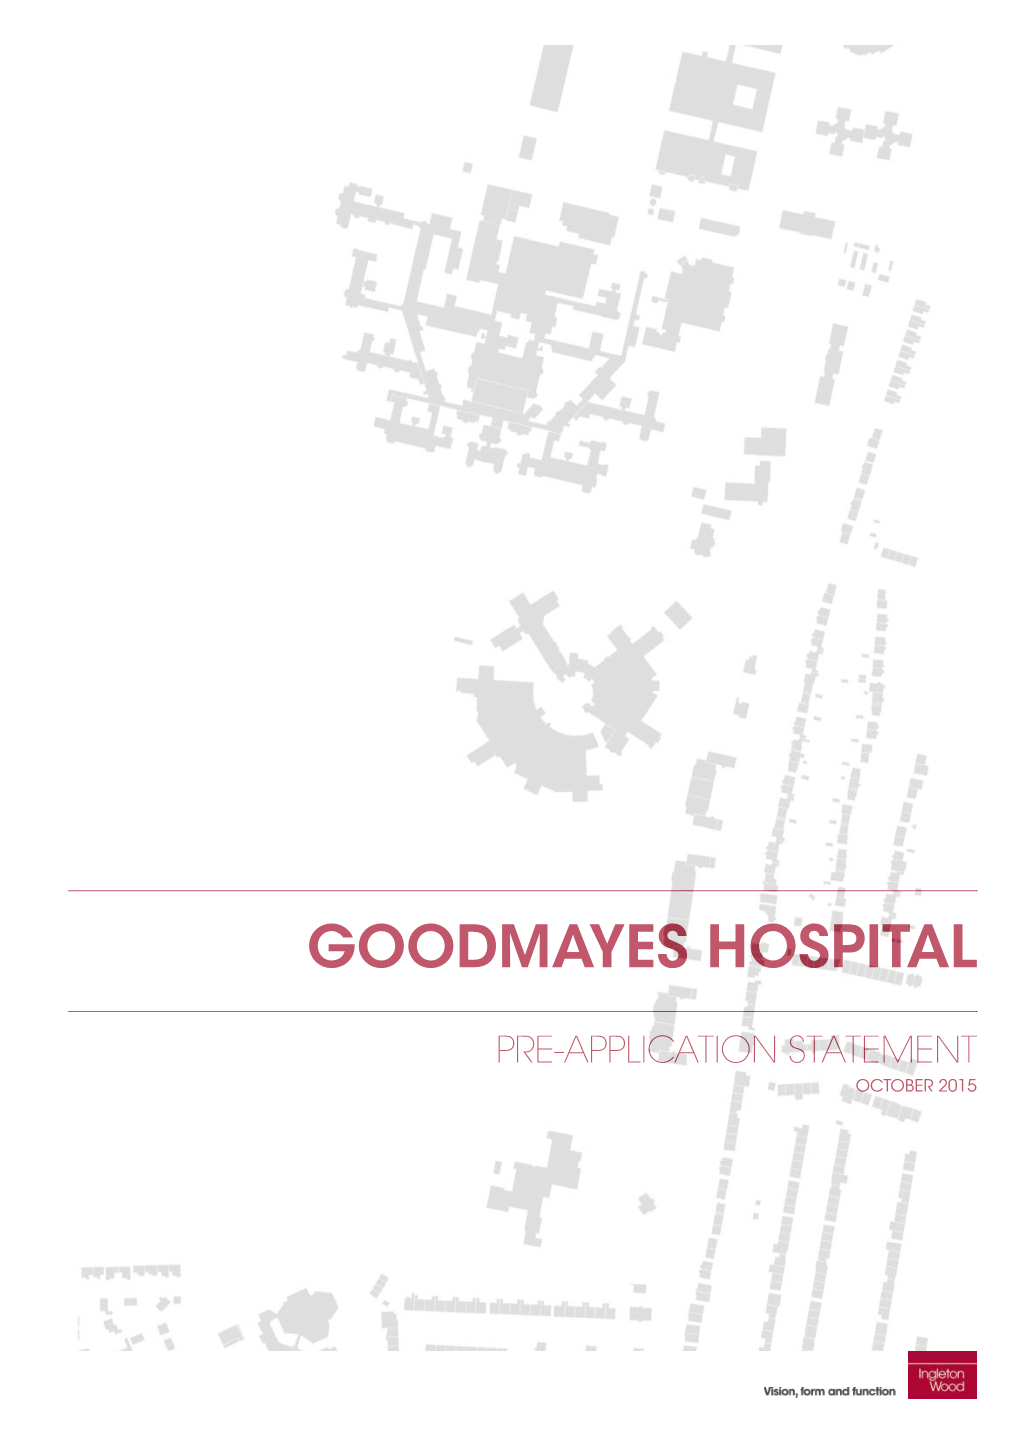 Goodmayes Hospital